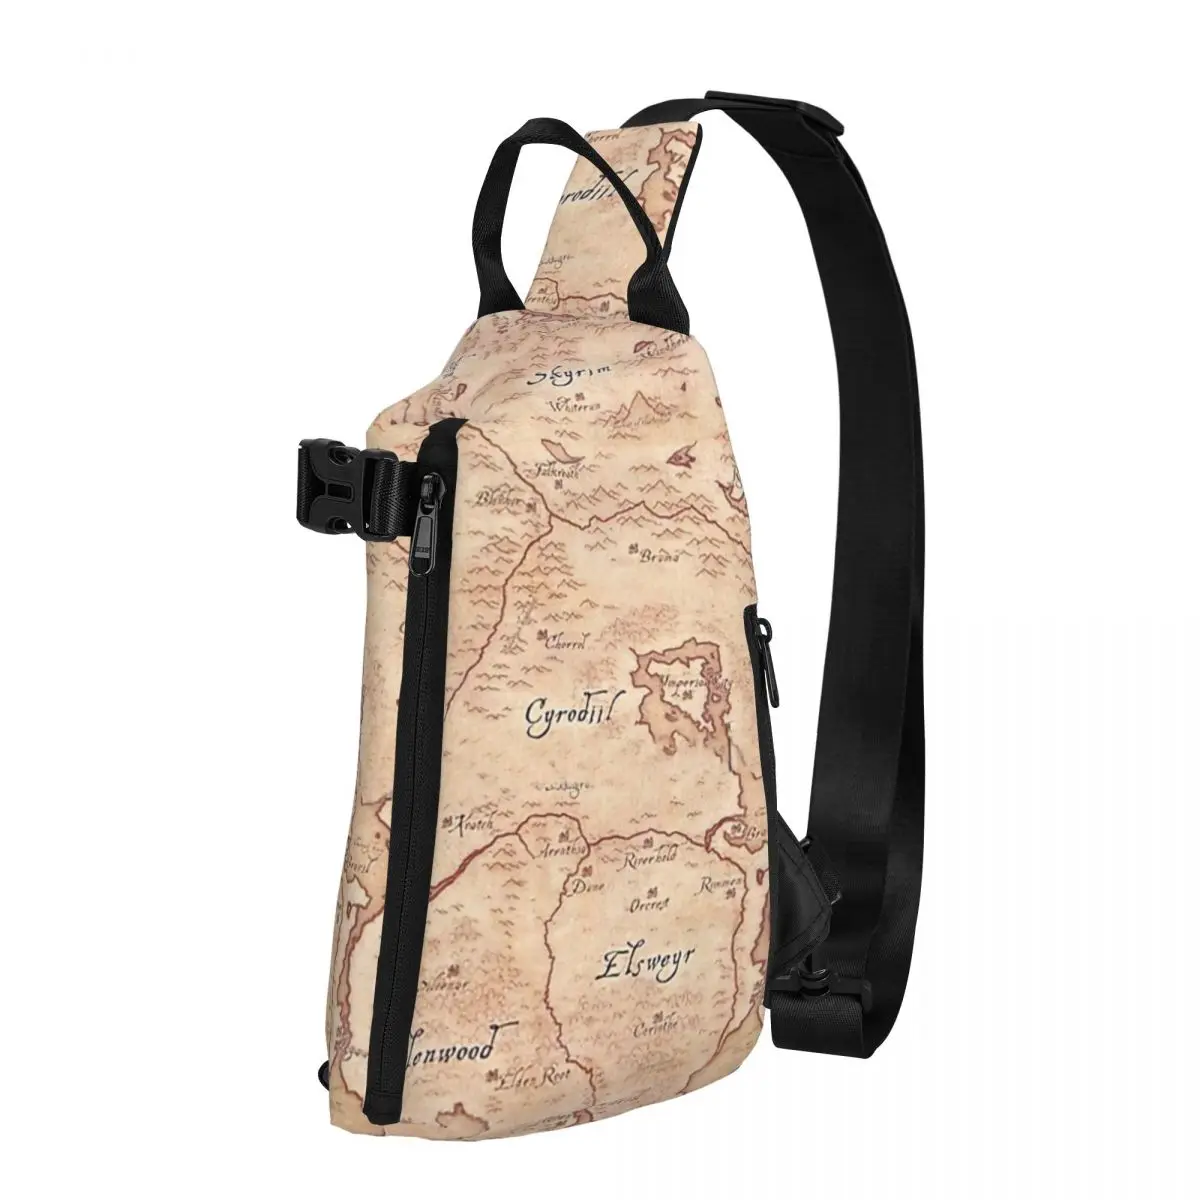 Tamriel Shoulder Bags Chest Cross Chest Bag Diagonally Casual Messenger Bag Travel Handbag